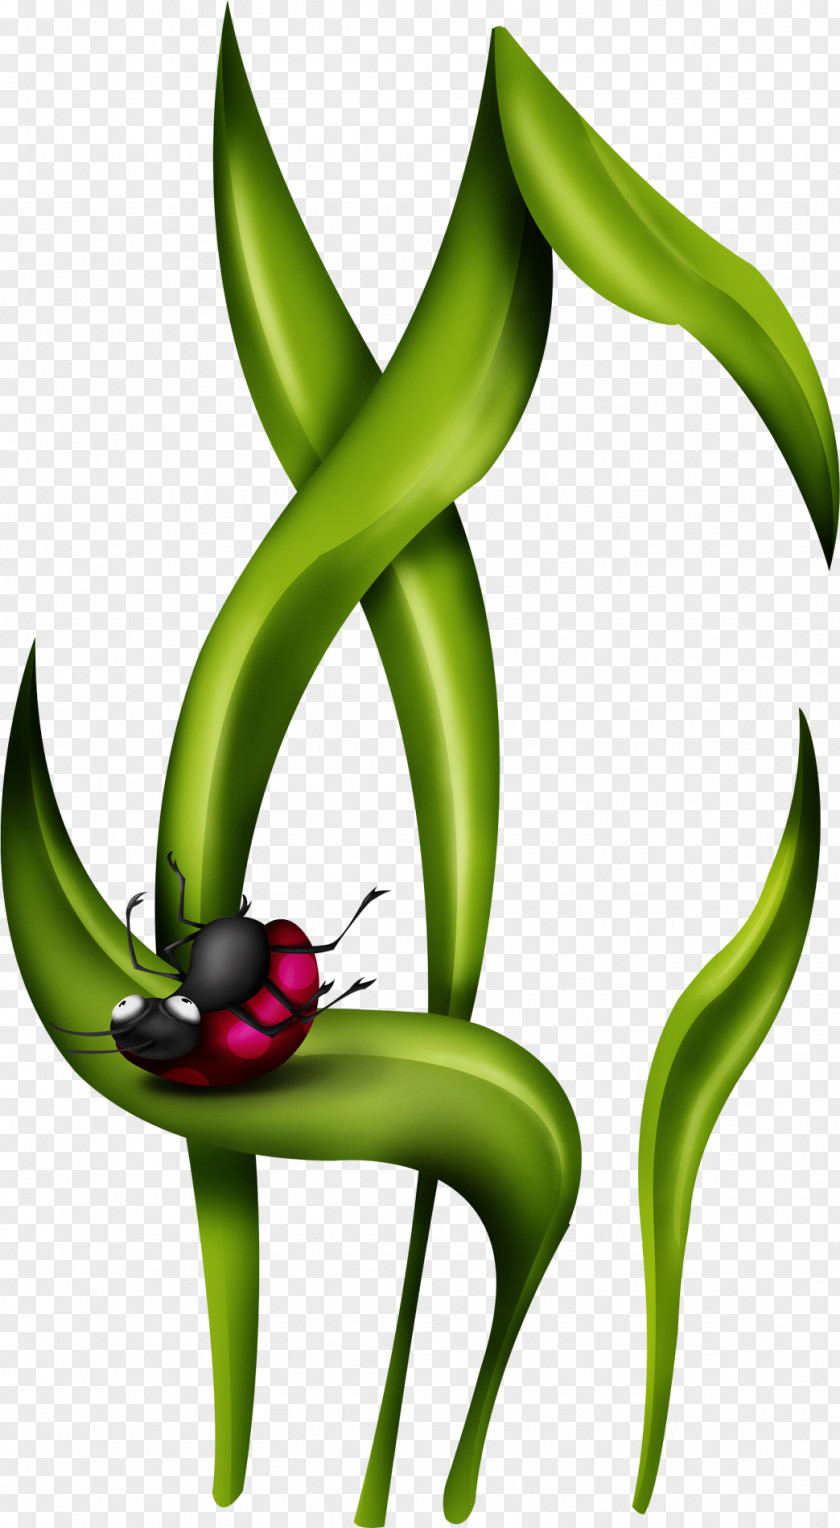 Cartoon Green Leaves Ladybug Coccinella Septempunctata Drawing Leaf Clip Art PNG